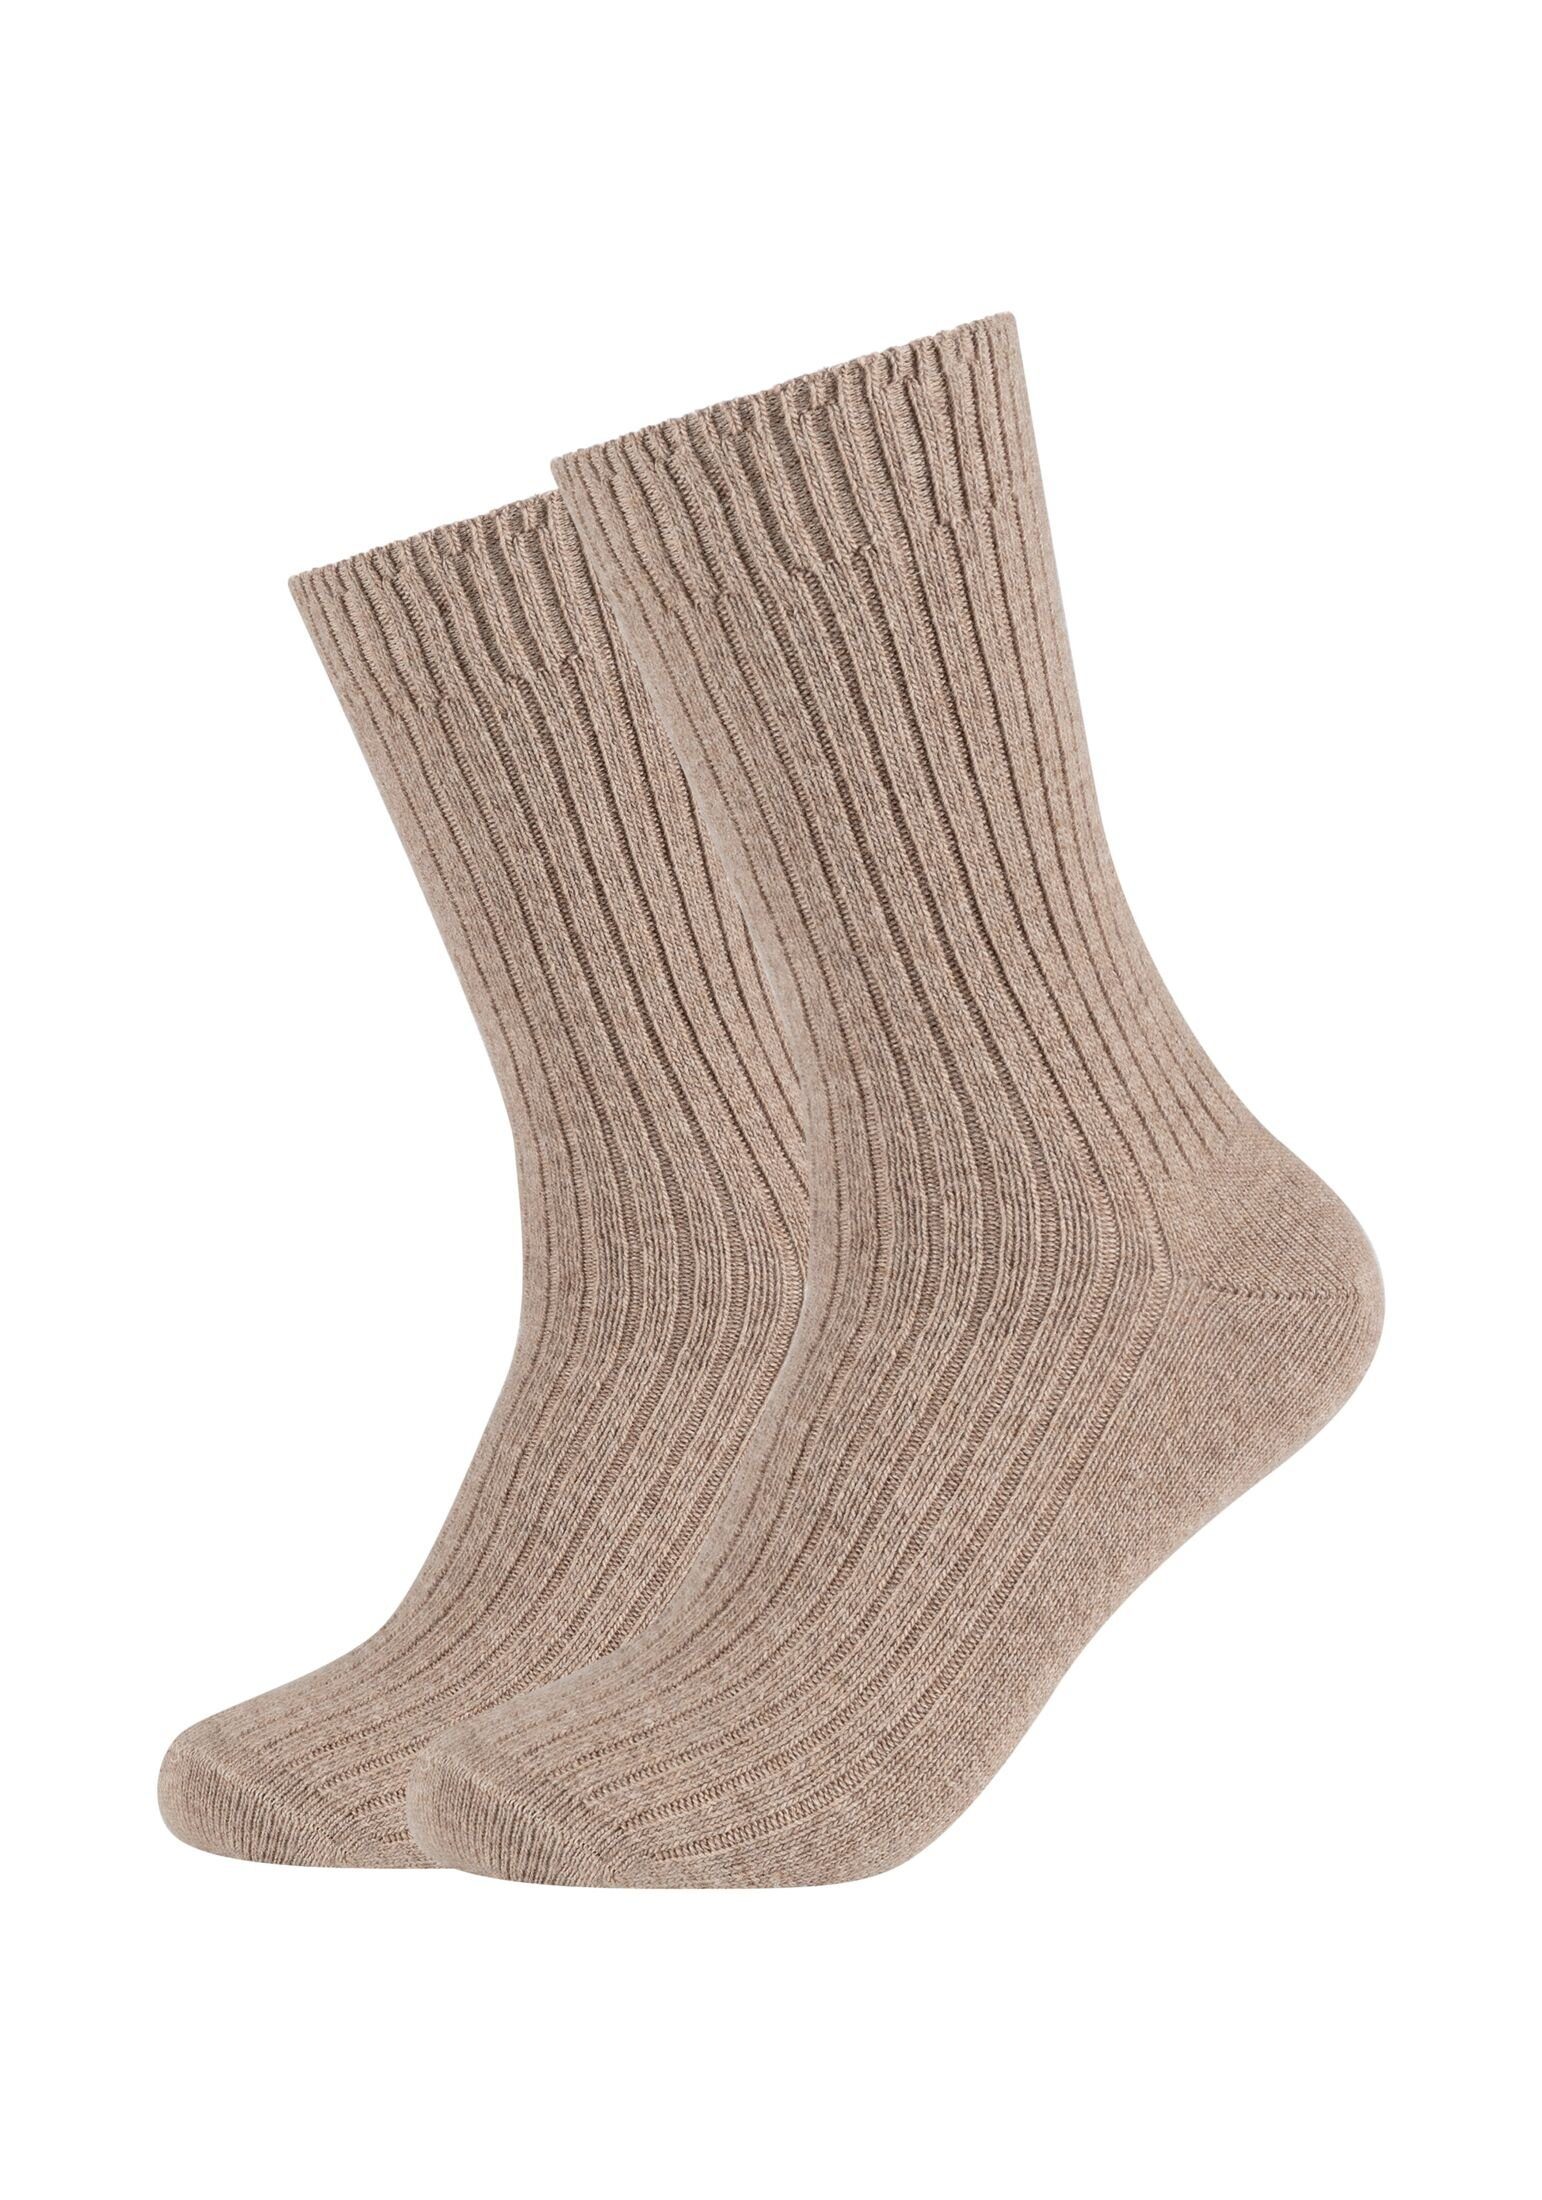 s.Oliver Socken Socken 2er Pack, Aus kuschelig wärmendem Wollmix mit  Kaschmir-Anteil